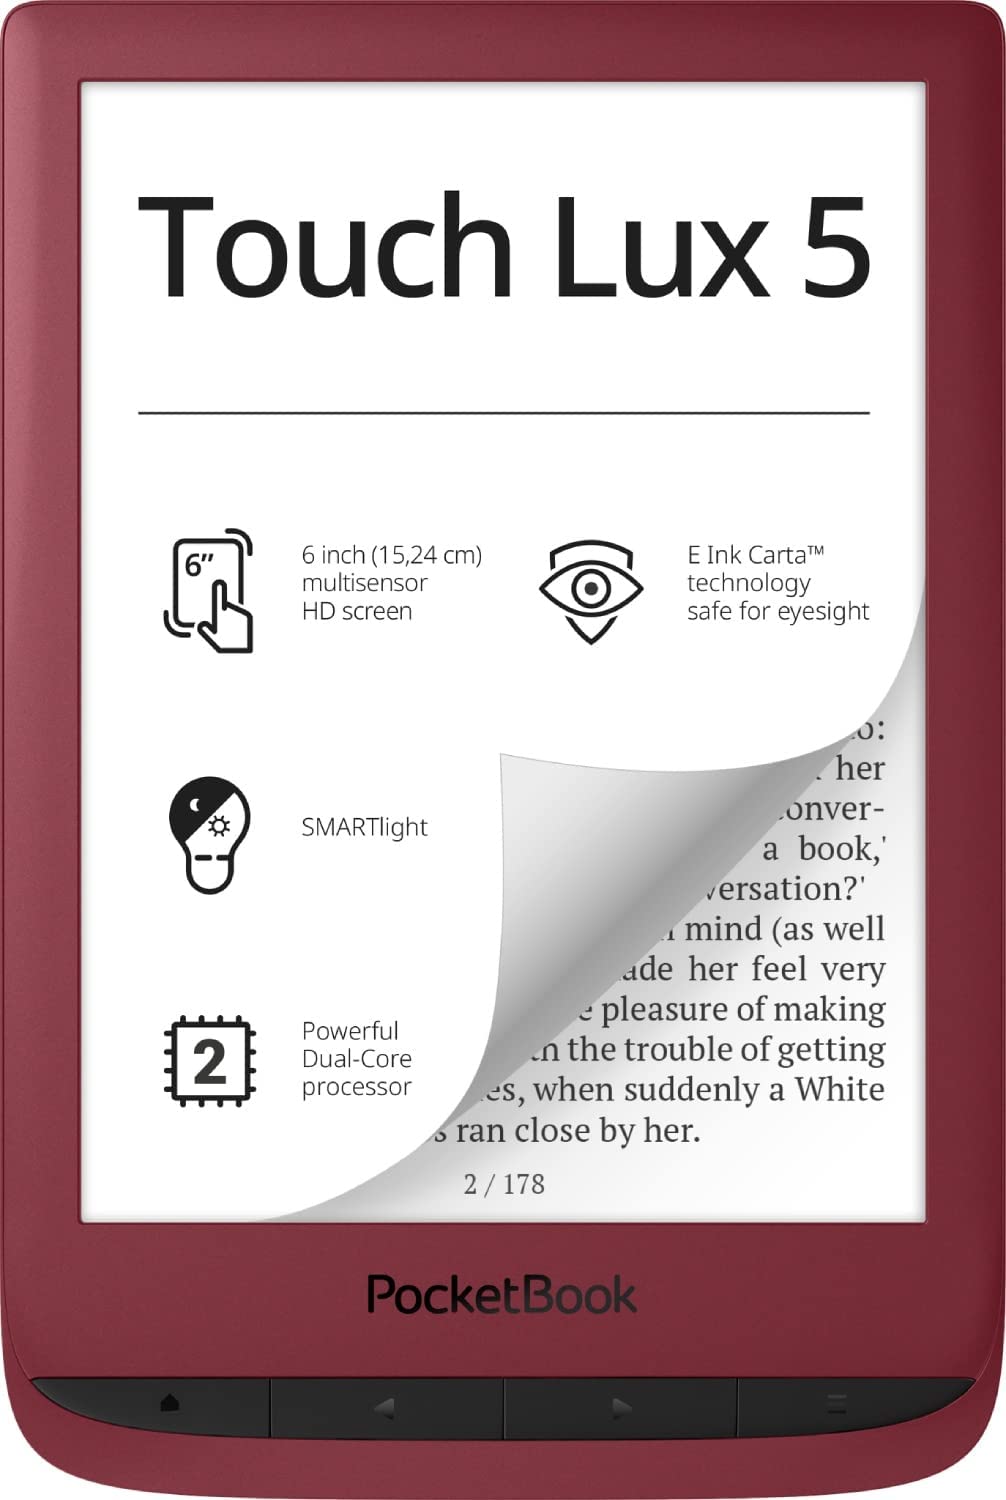 La Pocketbook Touch Lux 5